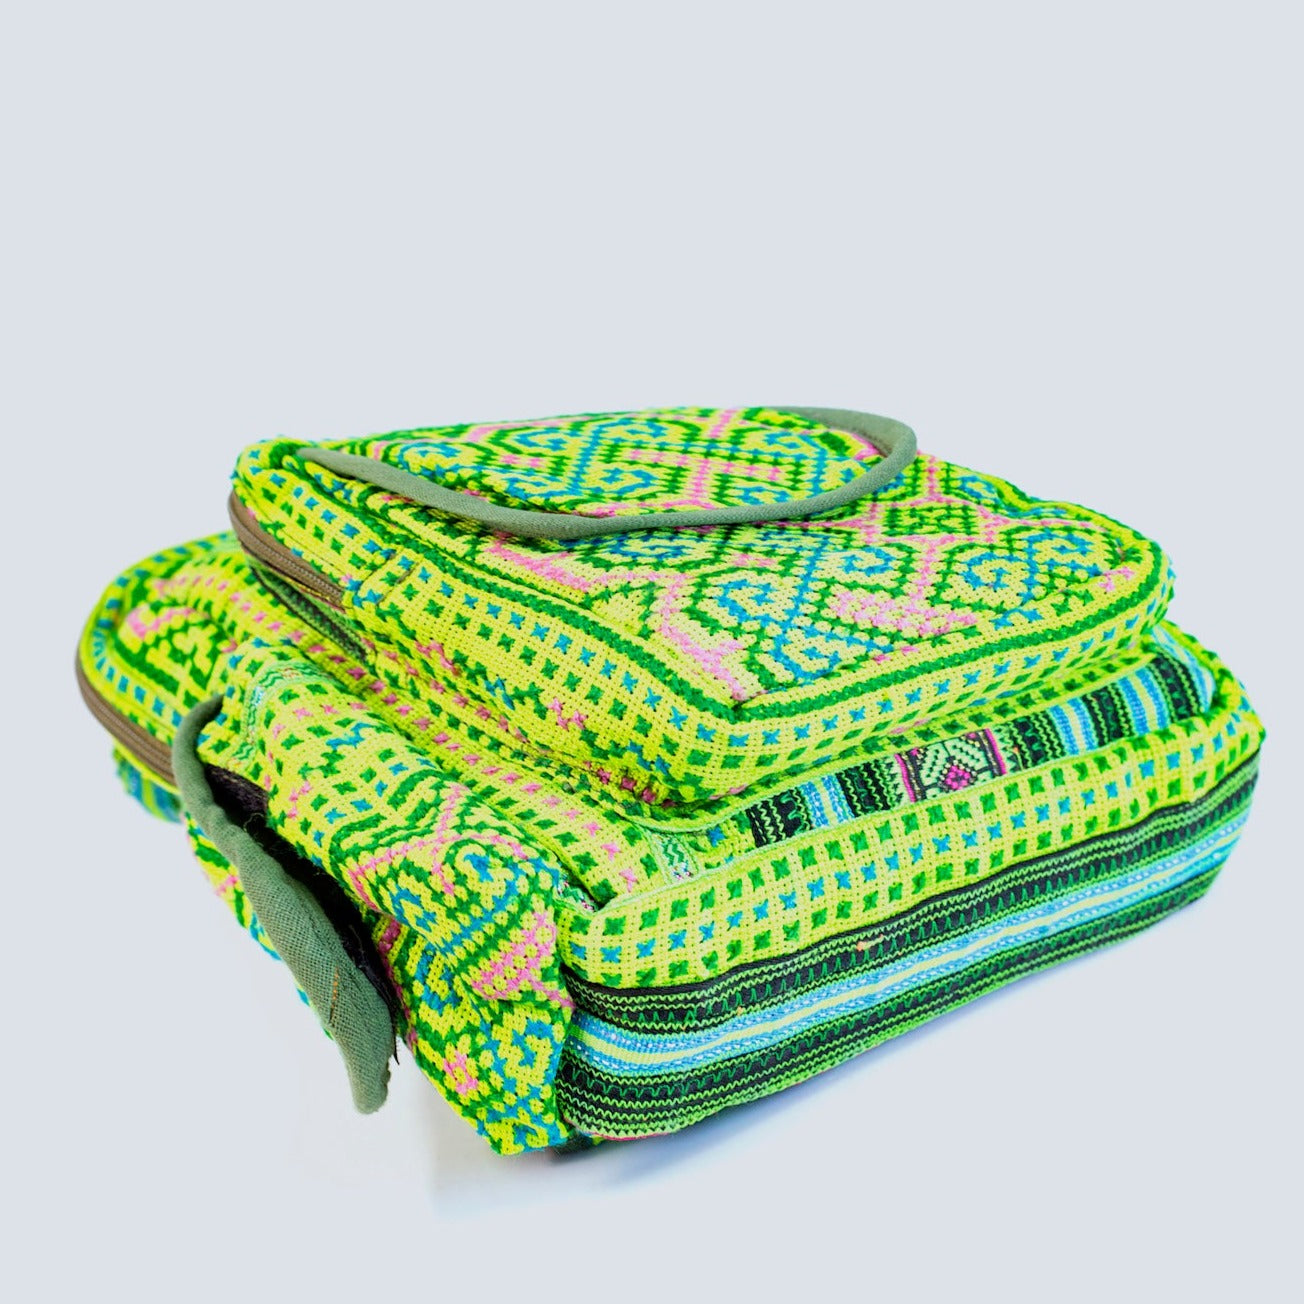 Boho-style linen, embroidery cross-body bag, H'mong tribal pattern